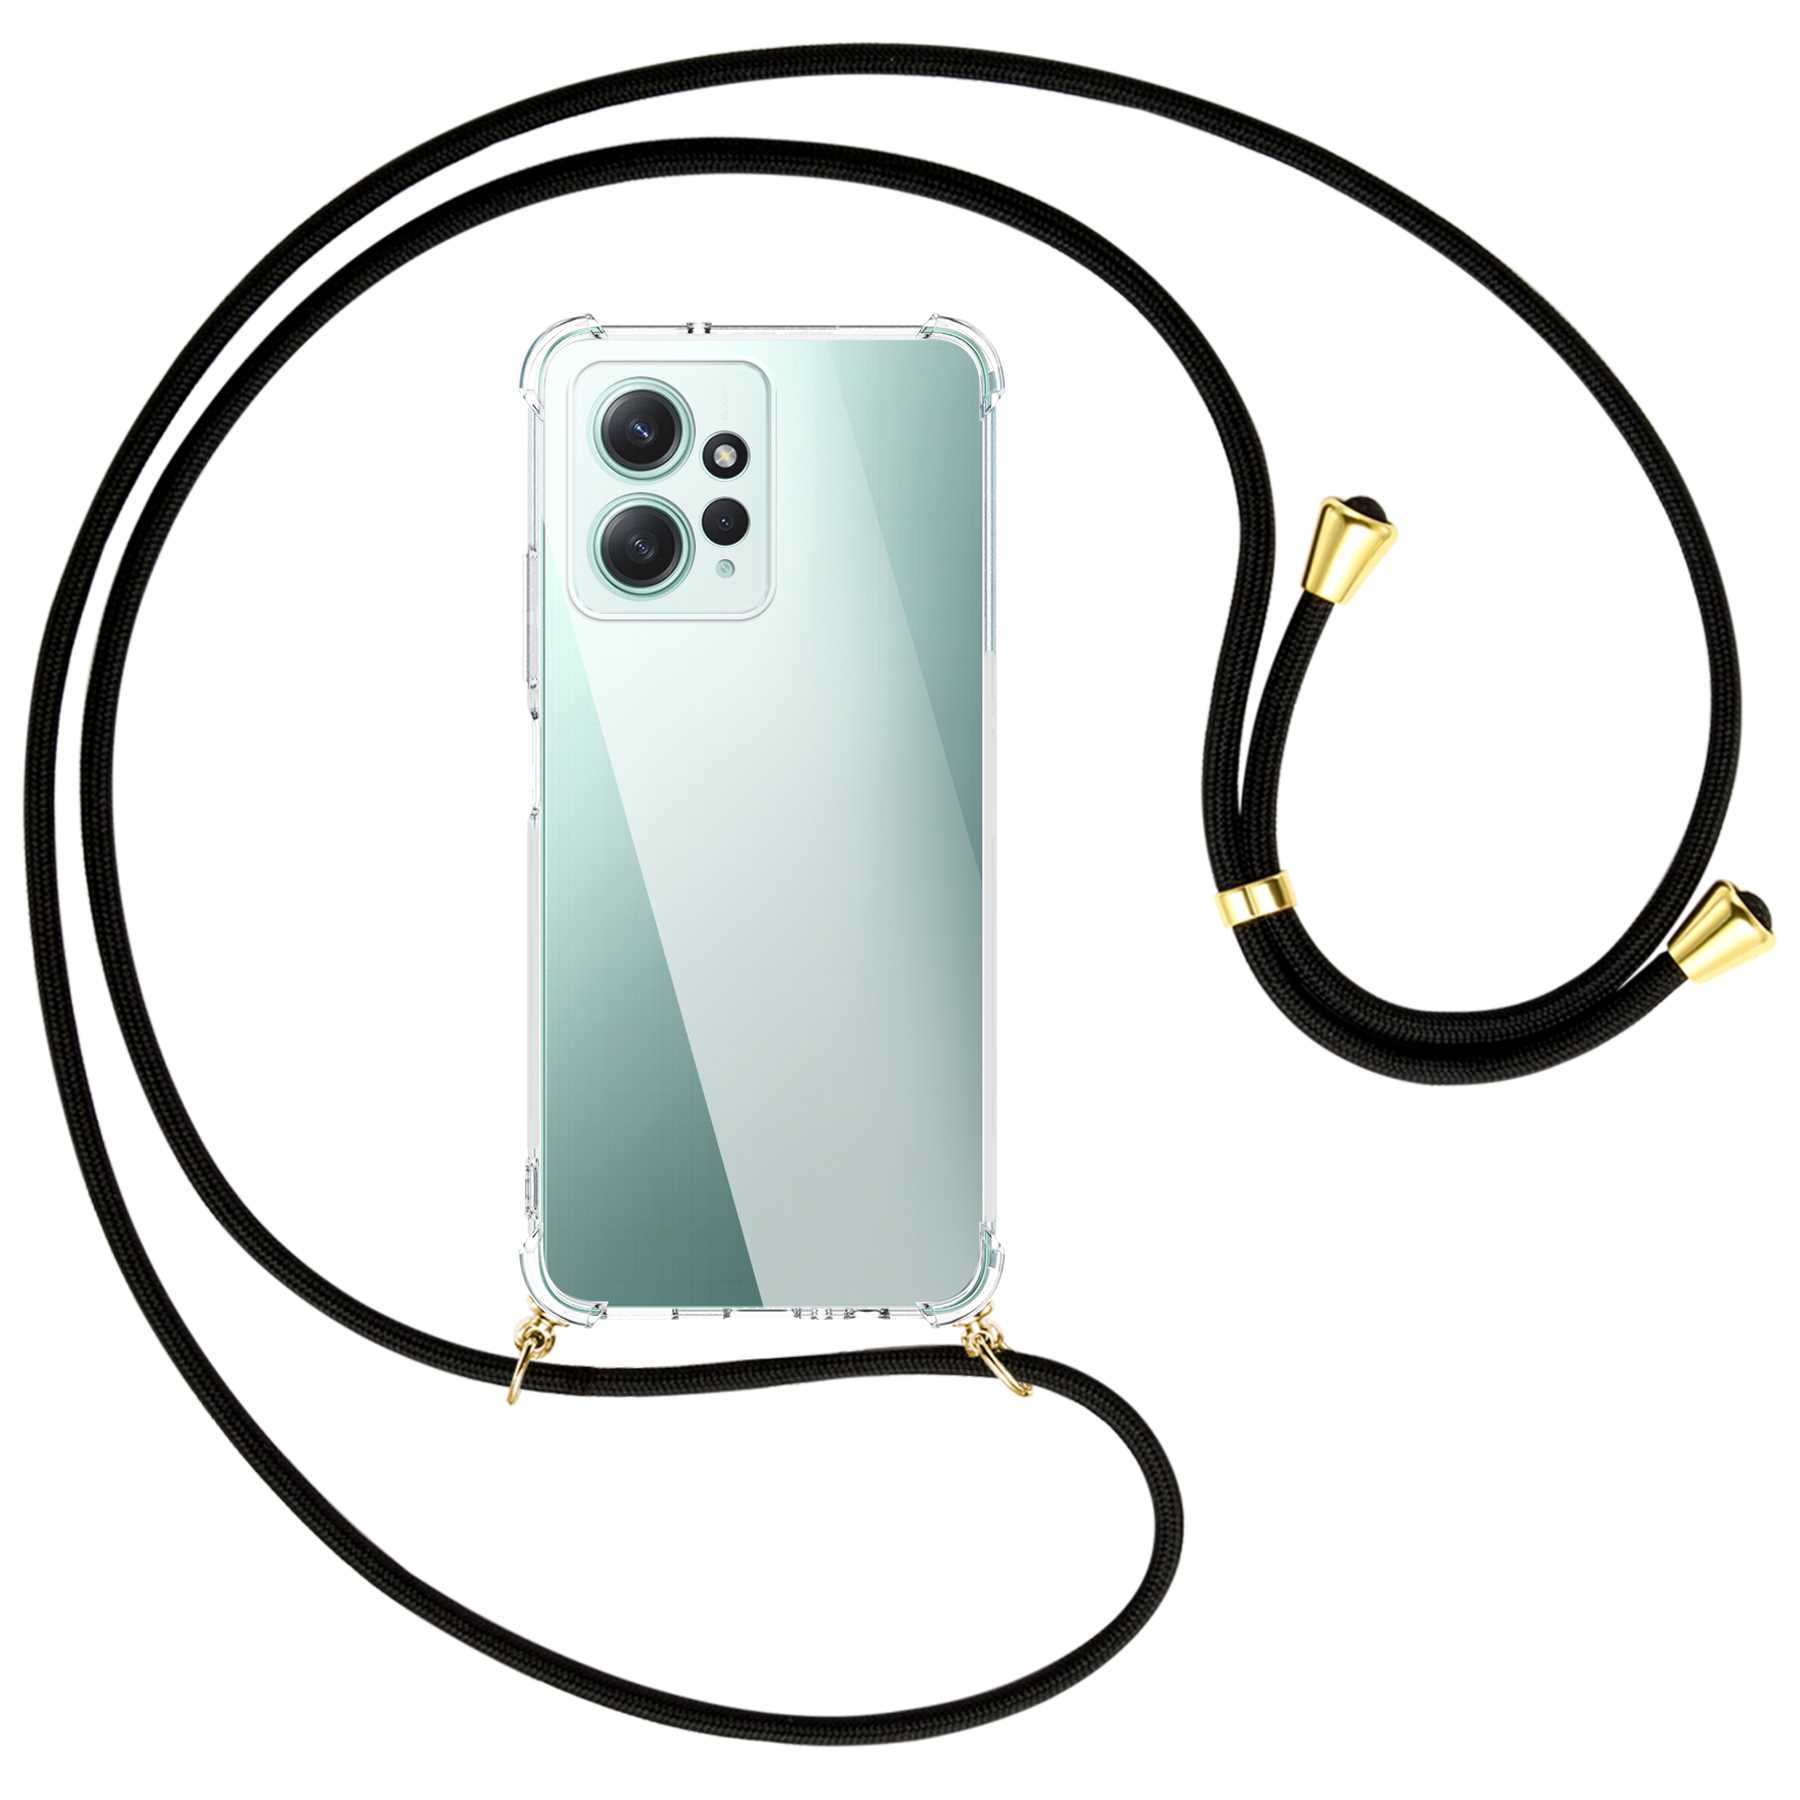 MTB MORE Note Xiaomi, Umhänge-Hülle Backcover, 12 ENERGY gold Kordel, mit Redmi 4G, Schwarz 